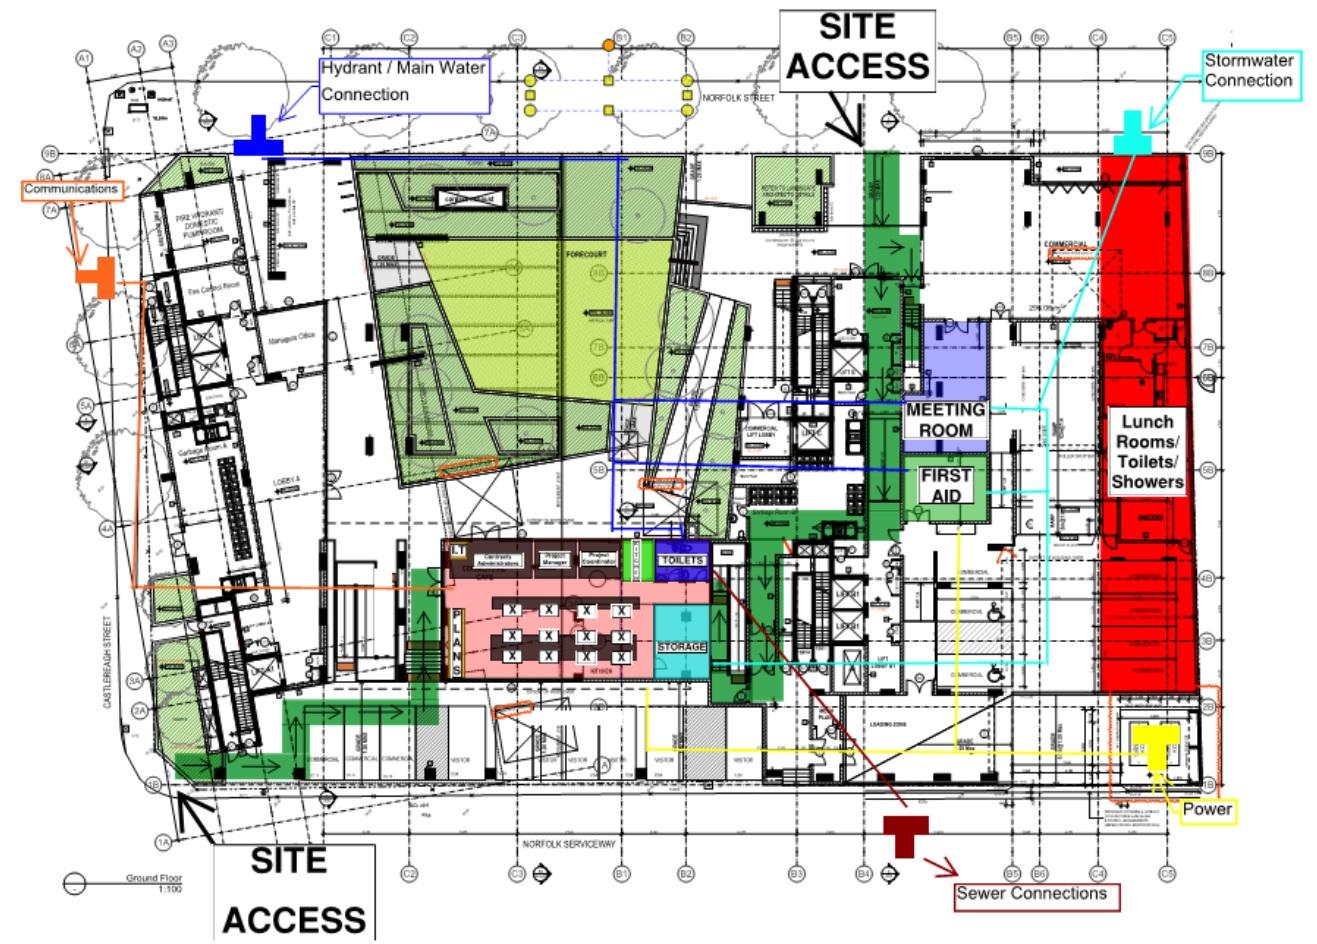 DAB Student Project: Site Establishment Plan for a Construction Project, by Alireza Fini